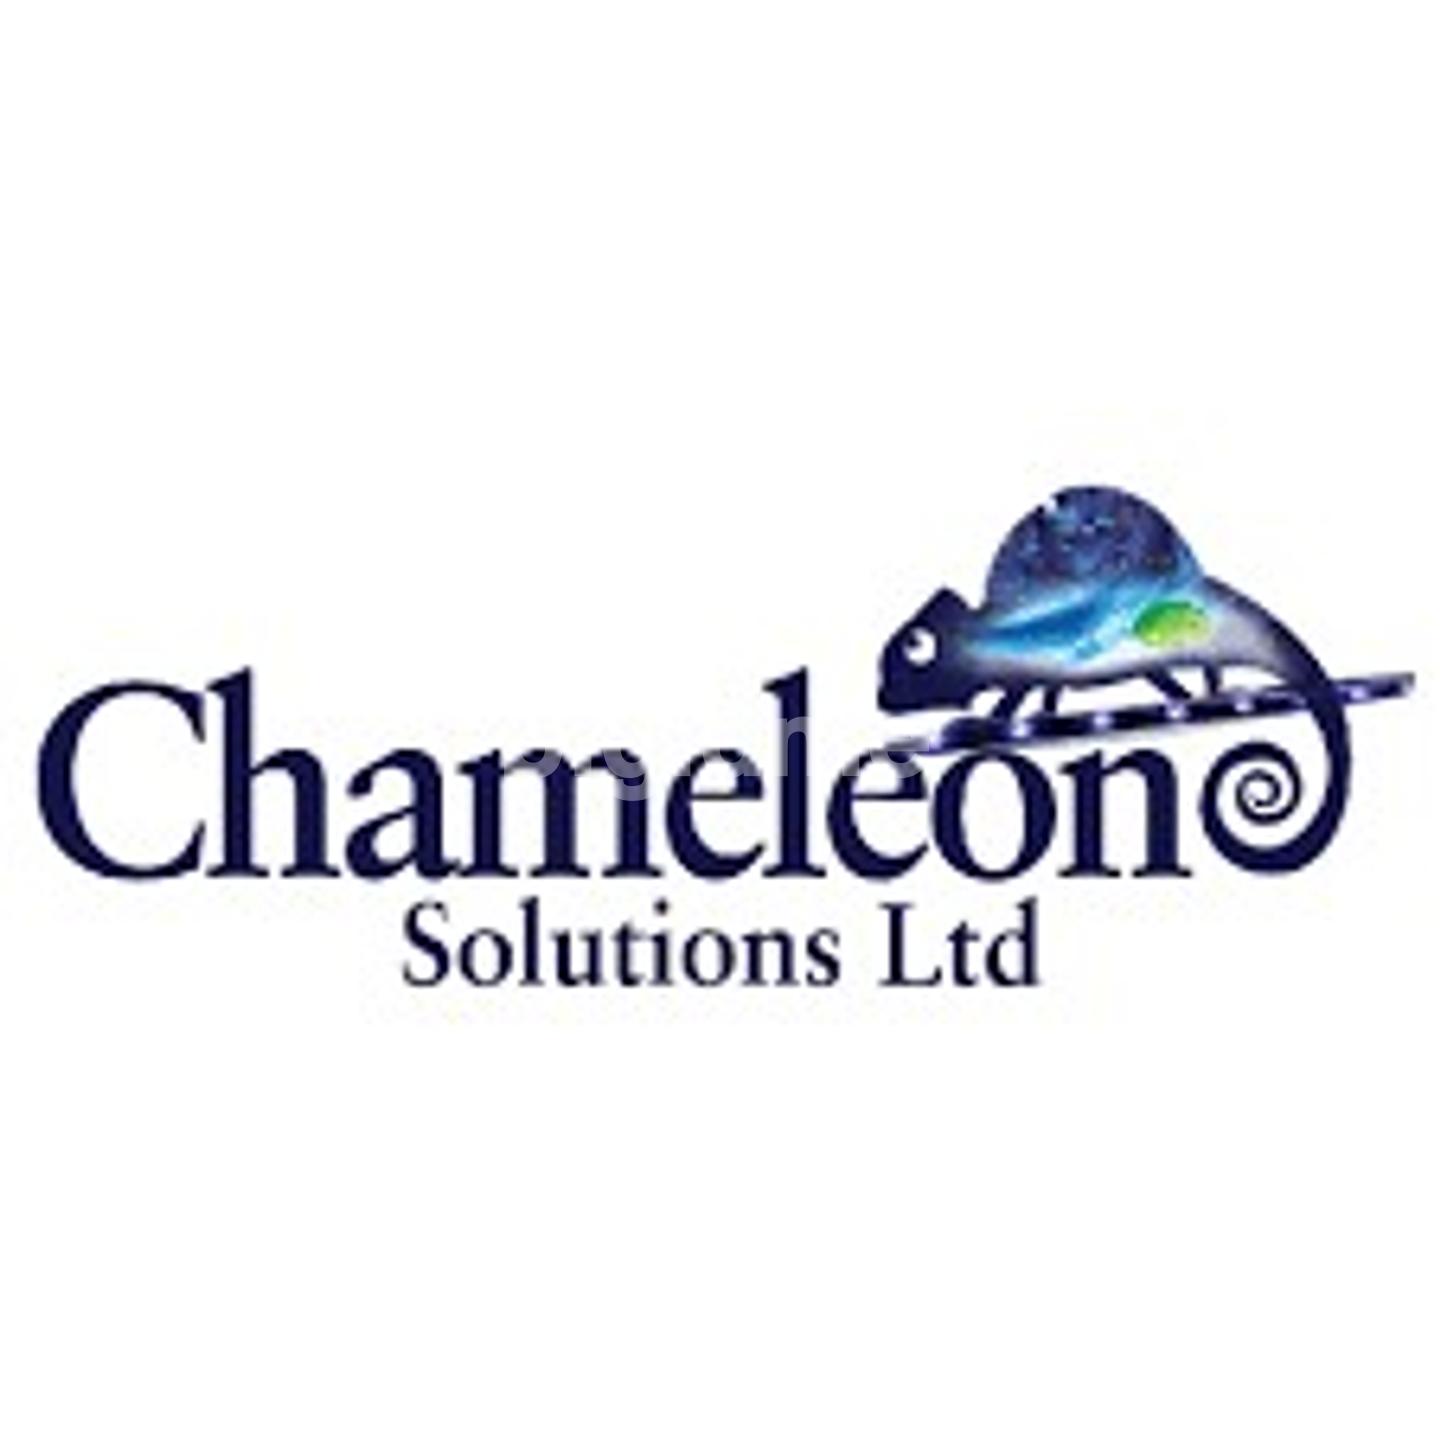 Chameleon Solutions Limited